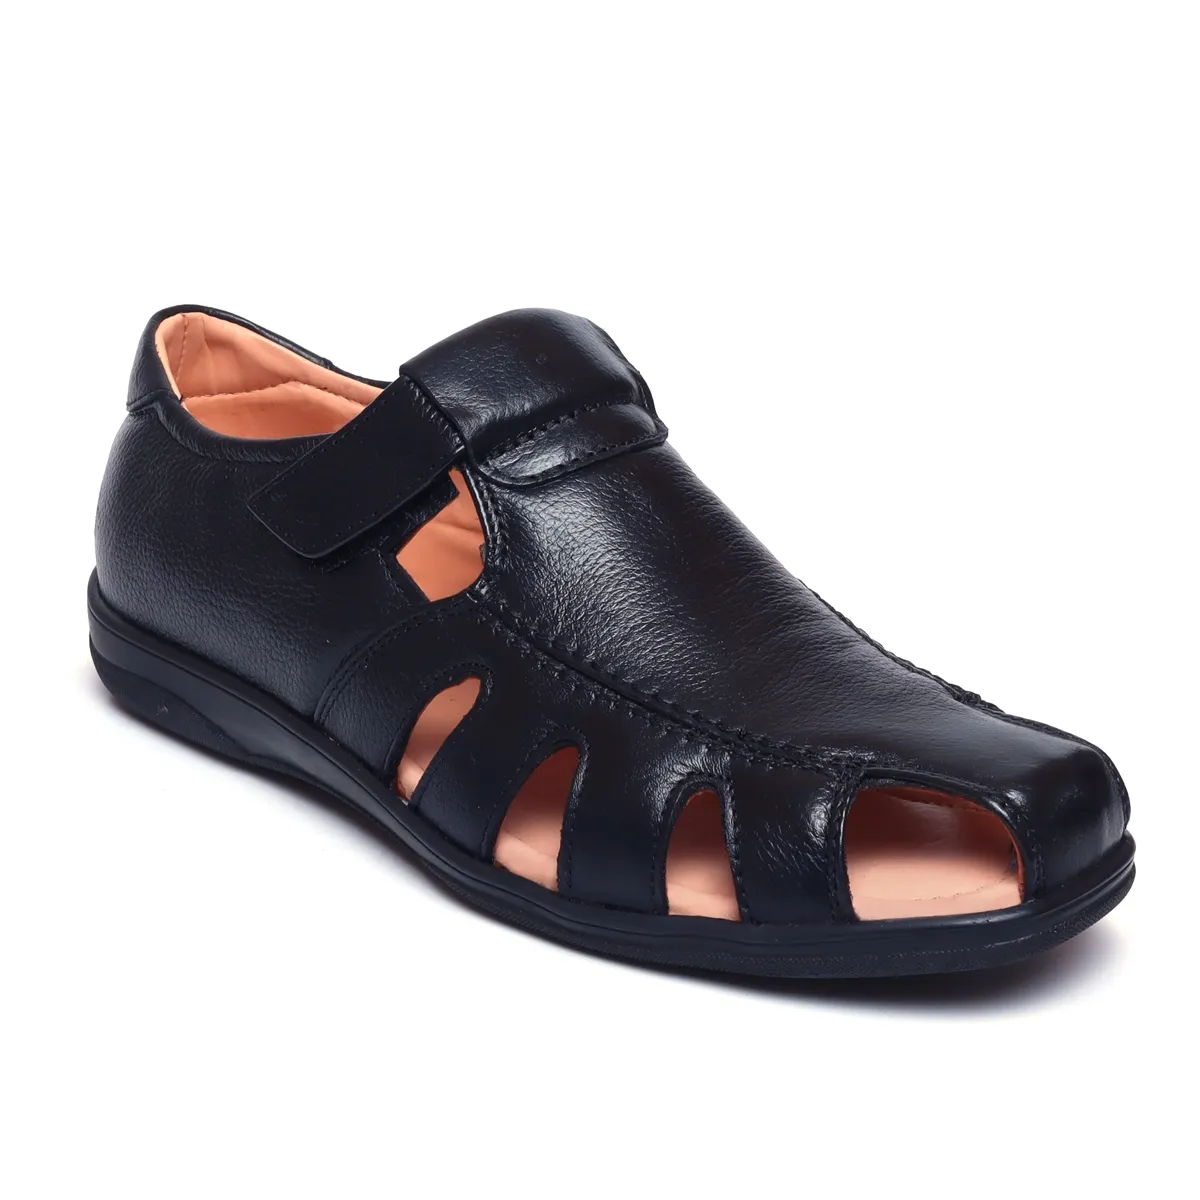 Men Pure Leather Sandals Casual Shoes Formal Shoes Outdoor Dress Shoes for Men Summer Sandals Handmade Fashion flip flops